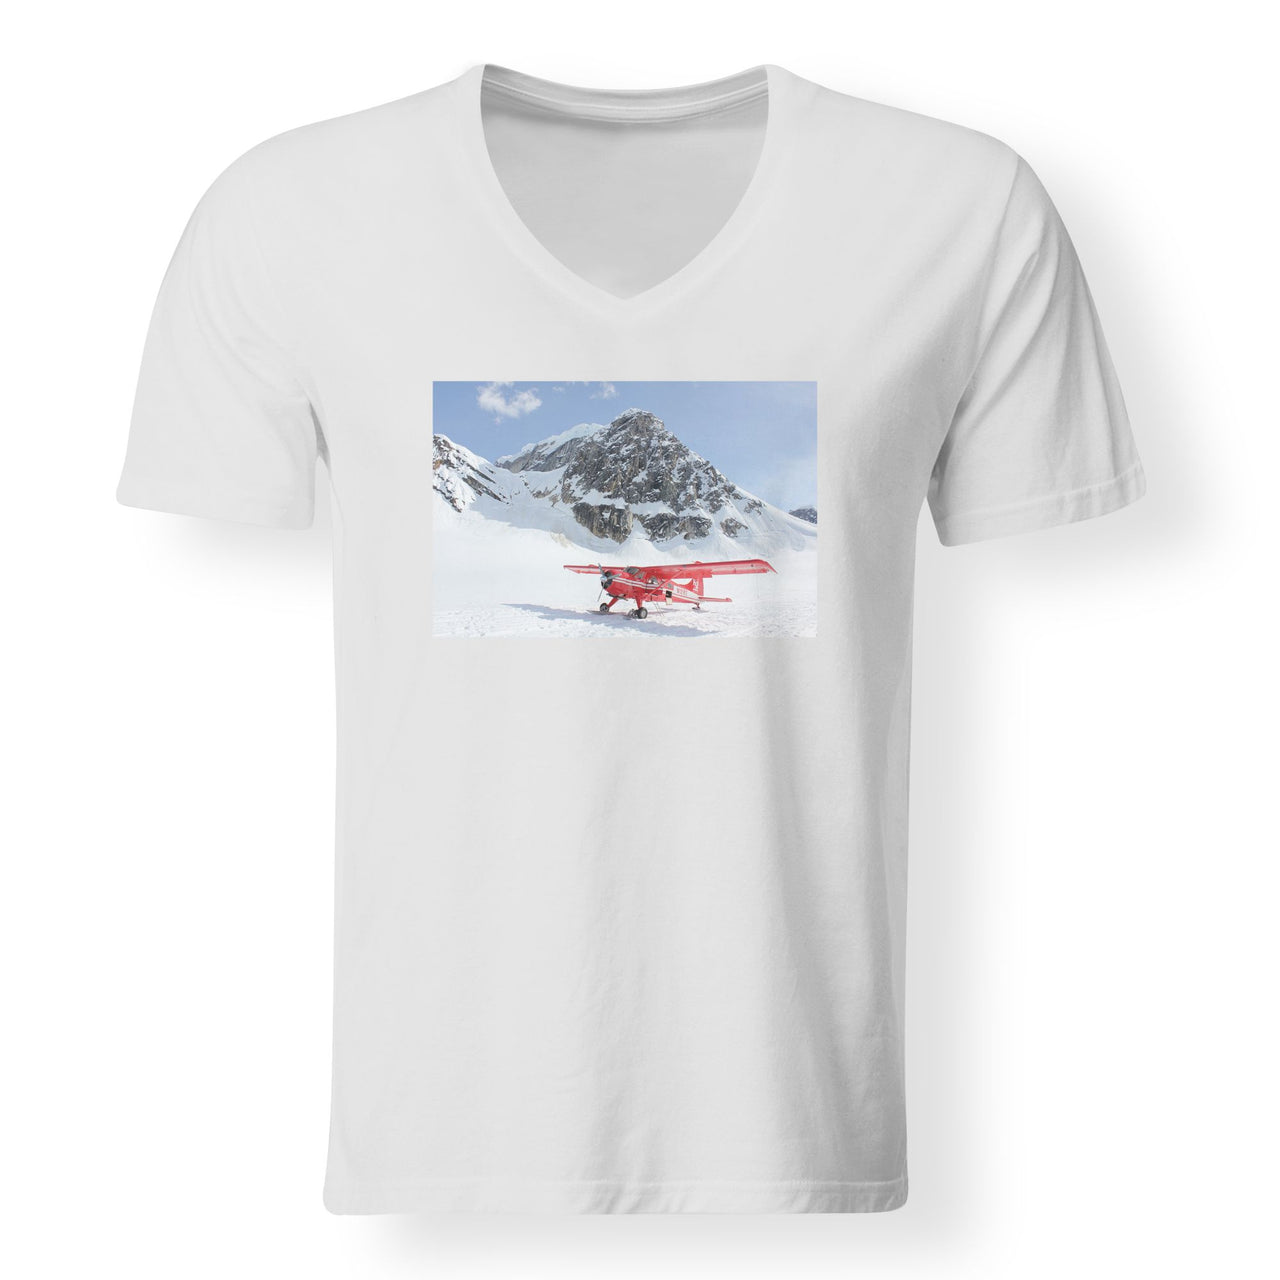 Amazing Snow Airplane Designed V-Neck T-Shirts